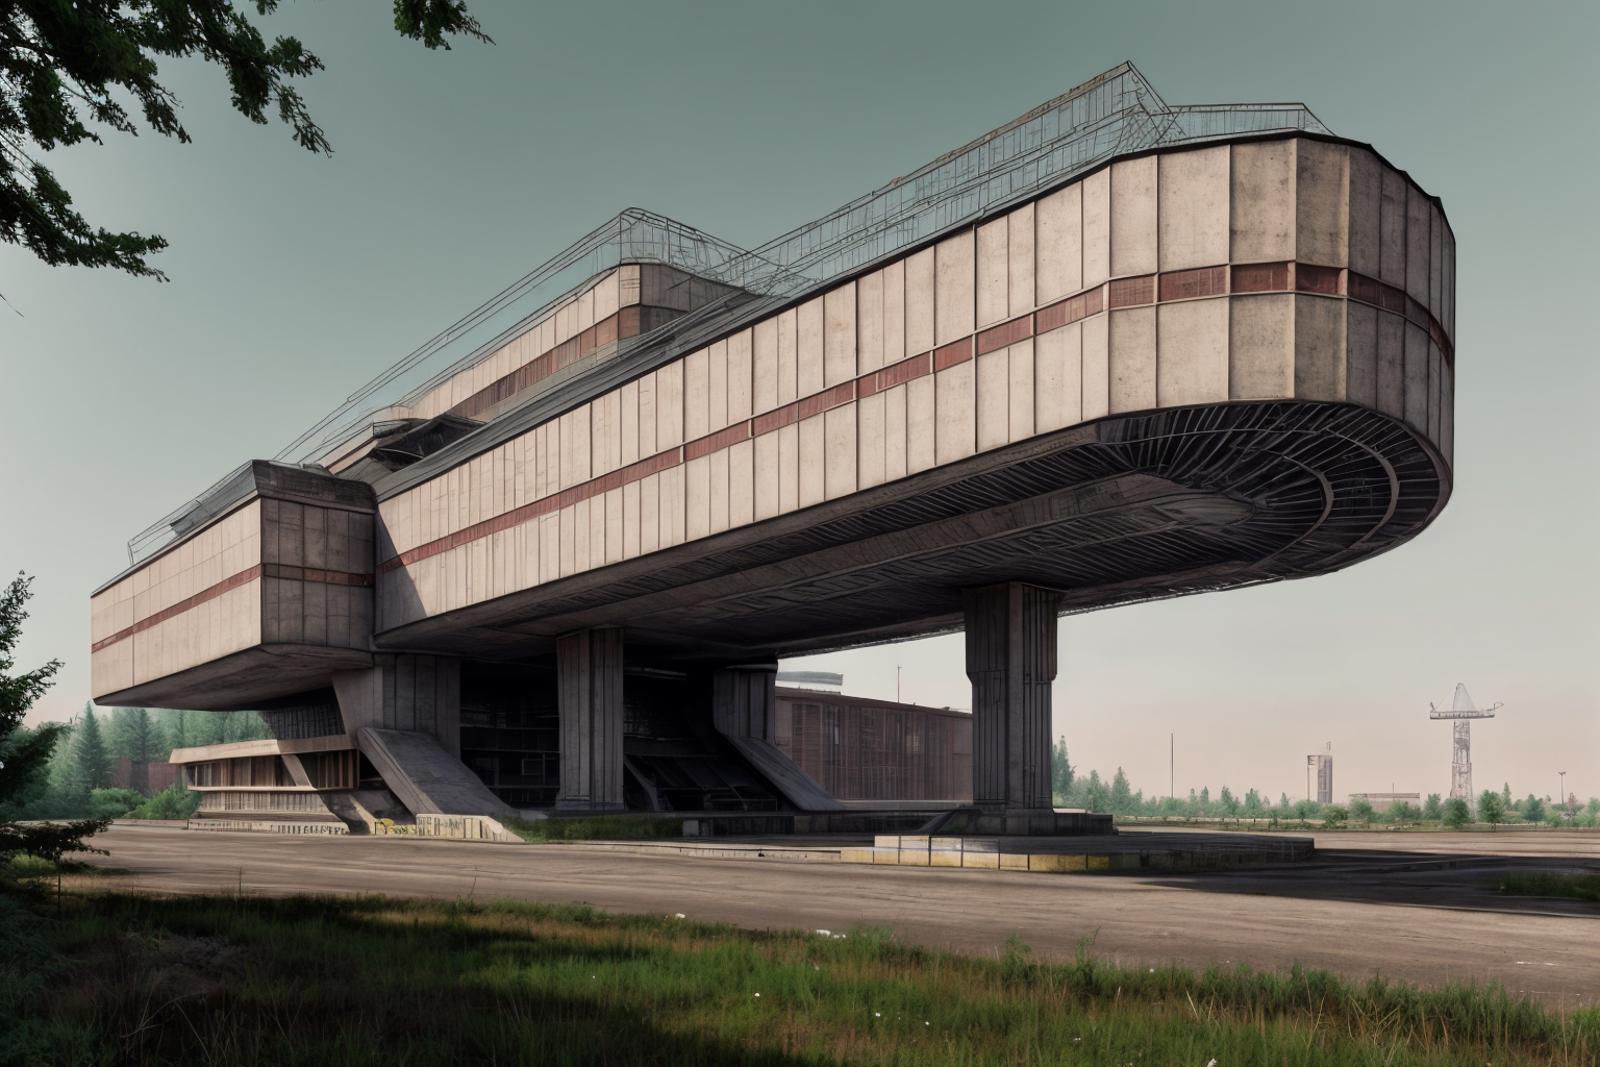 Soviet architecture image by OsTri